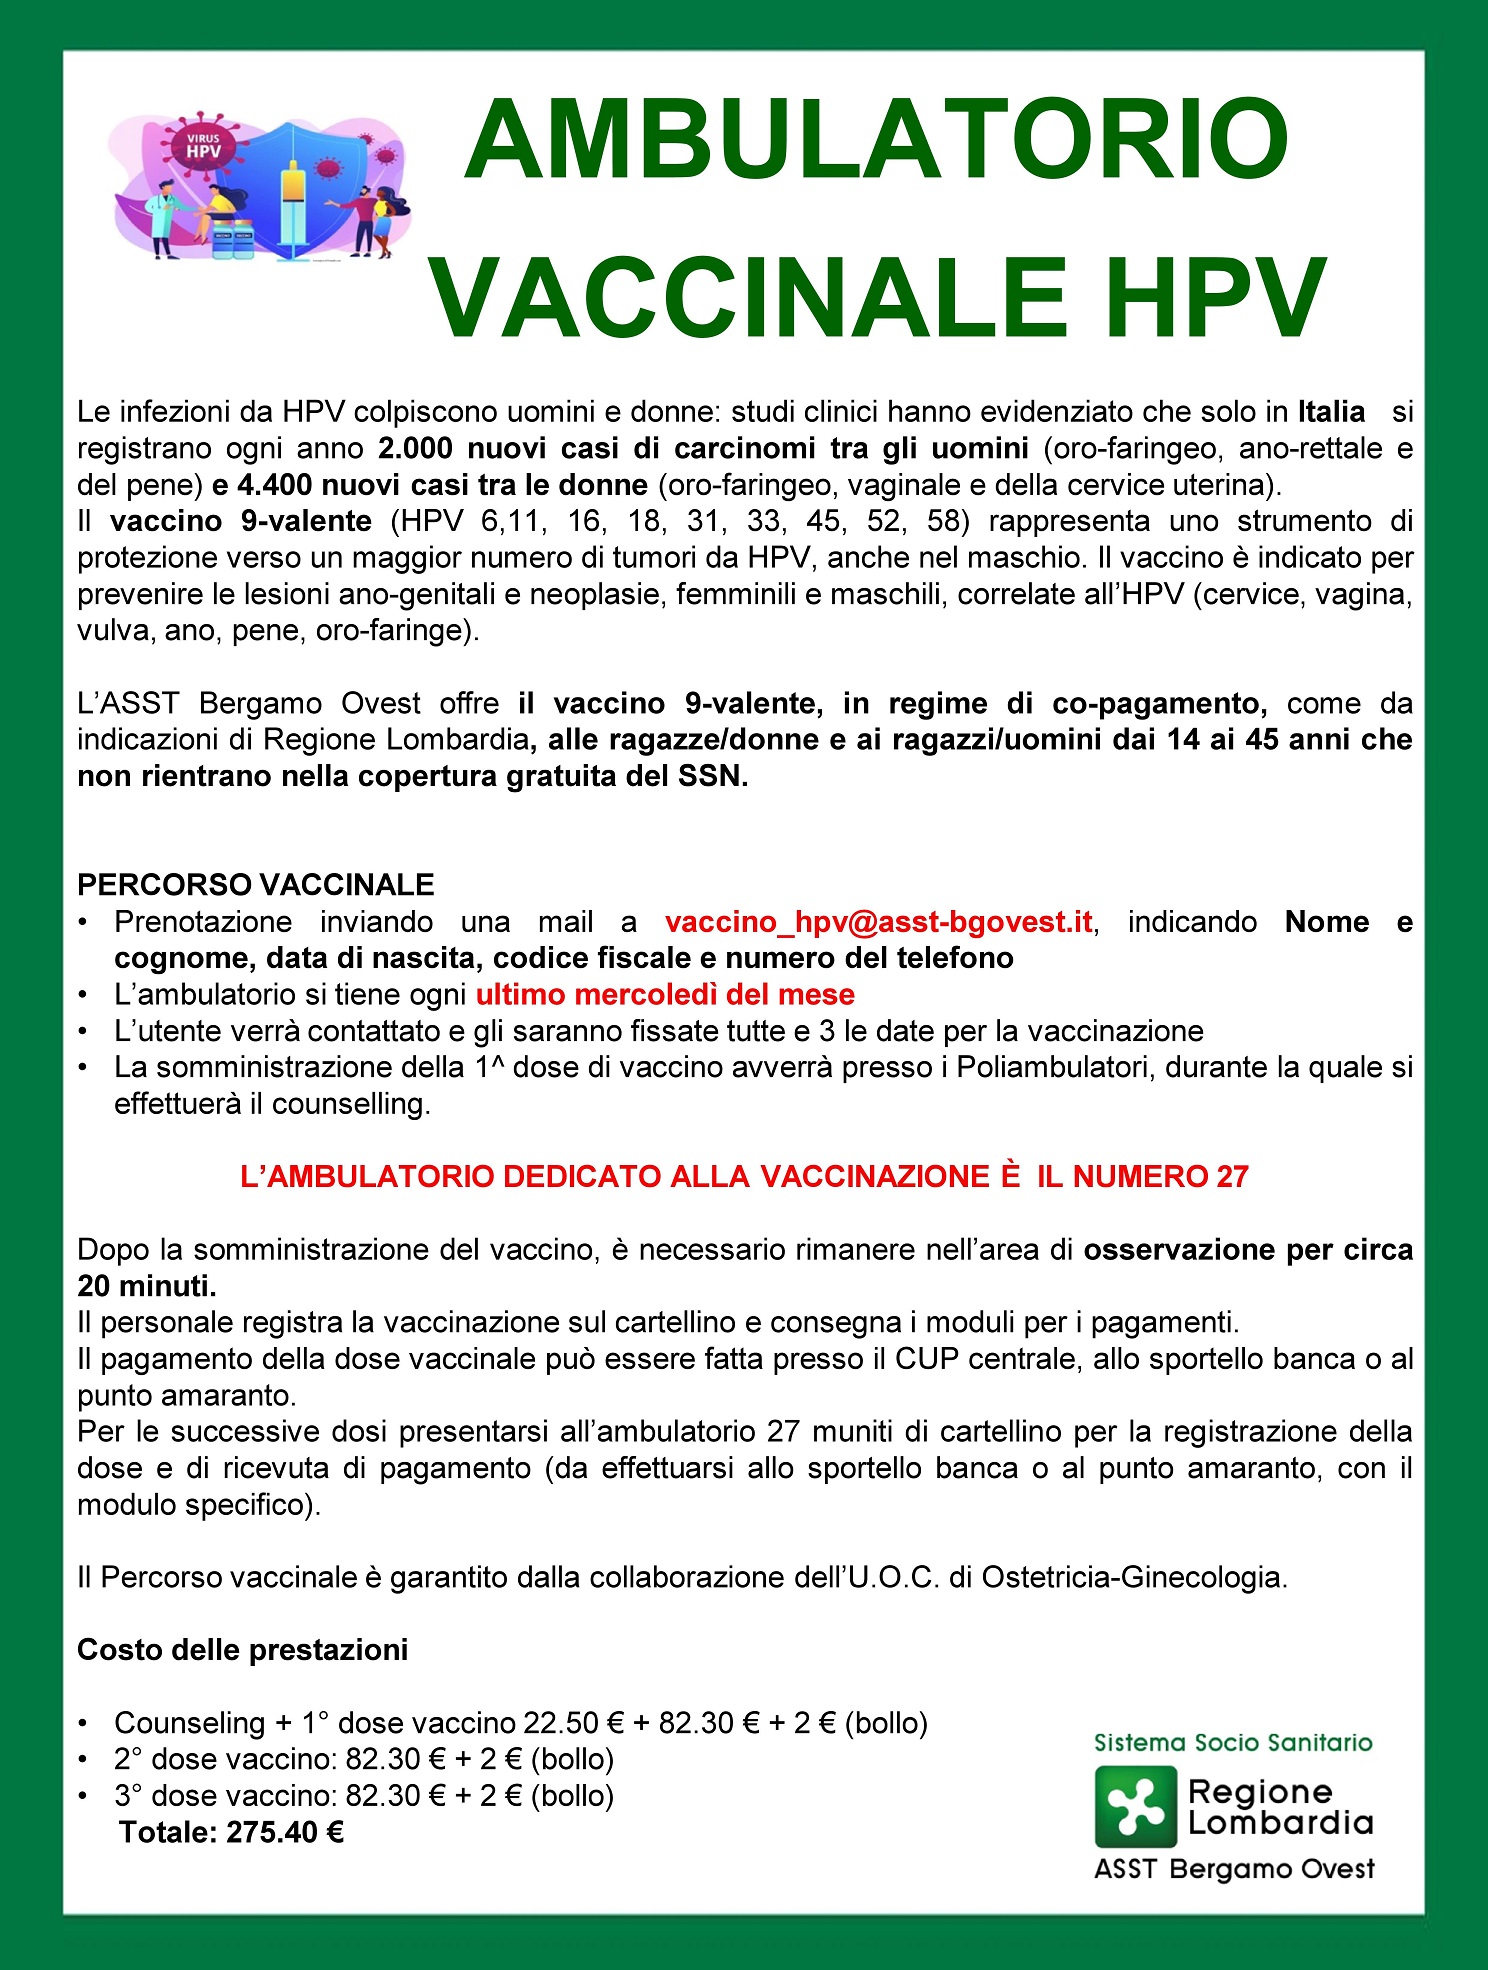 vaccino papilloma virus per uomo)